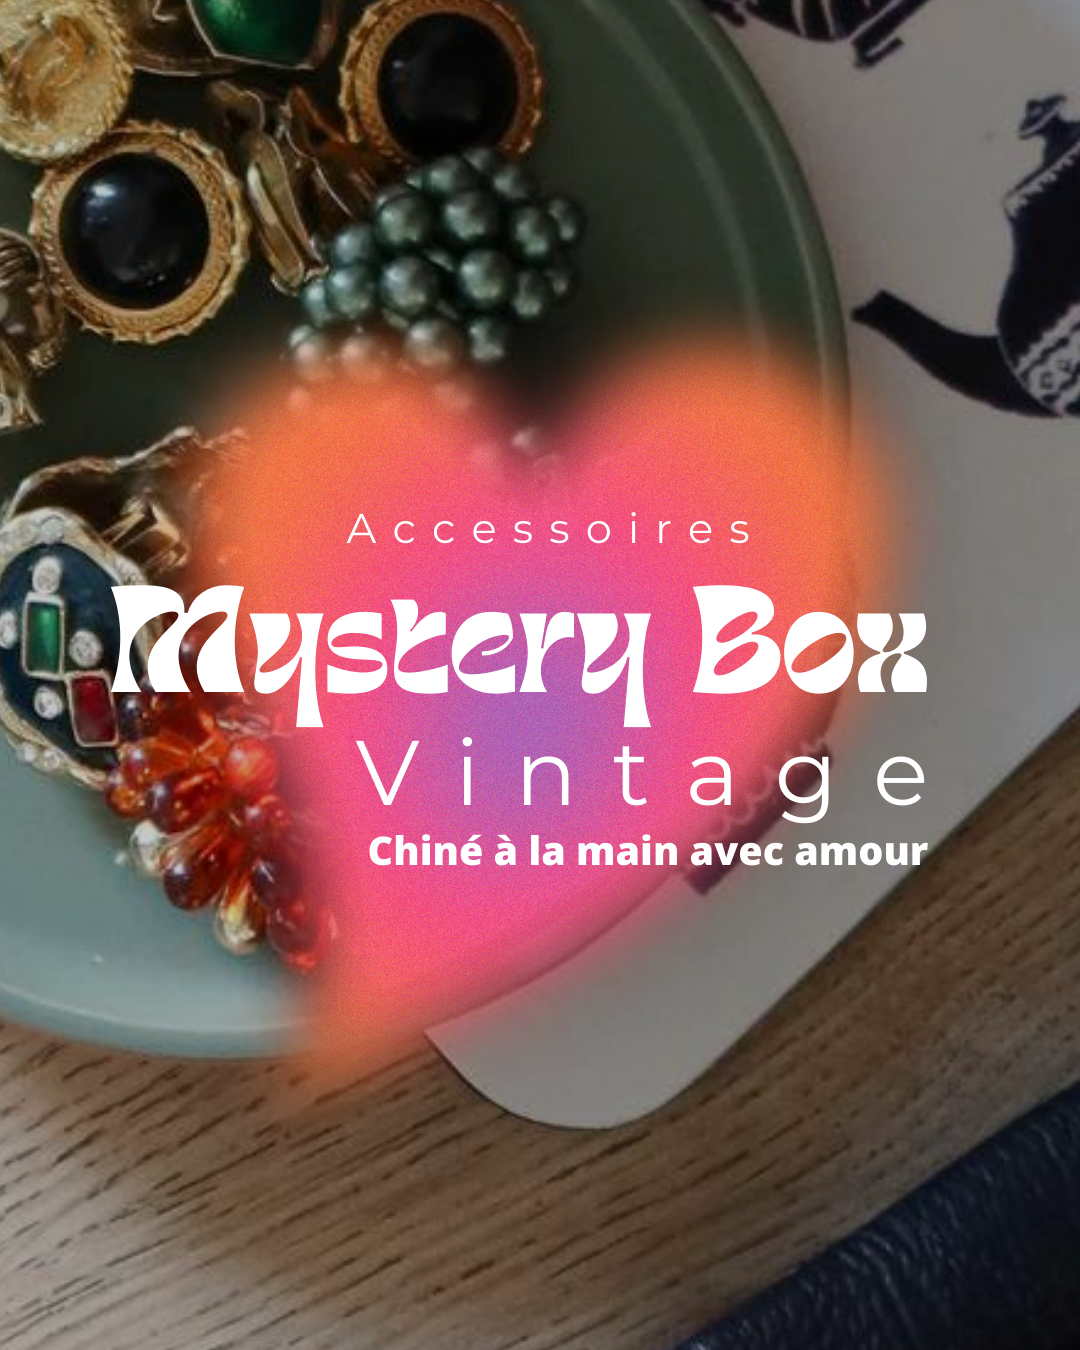 Mystery Box Vintage - Accessoires